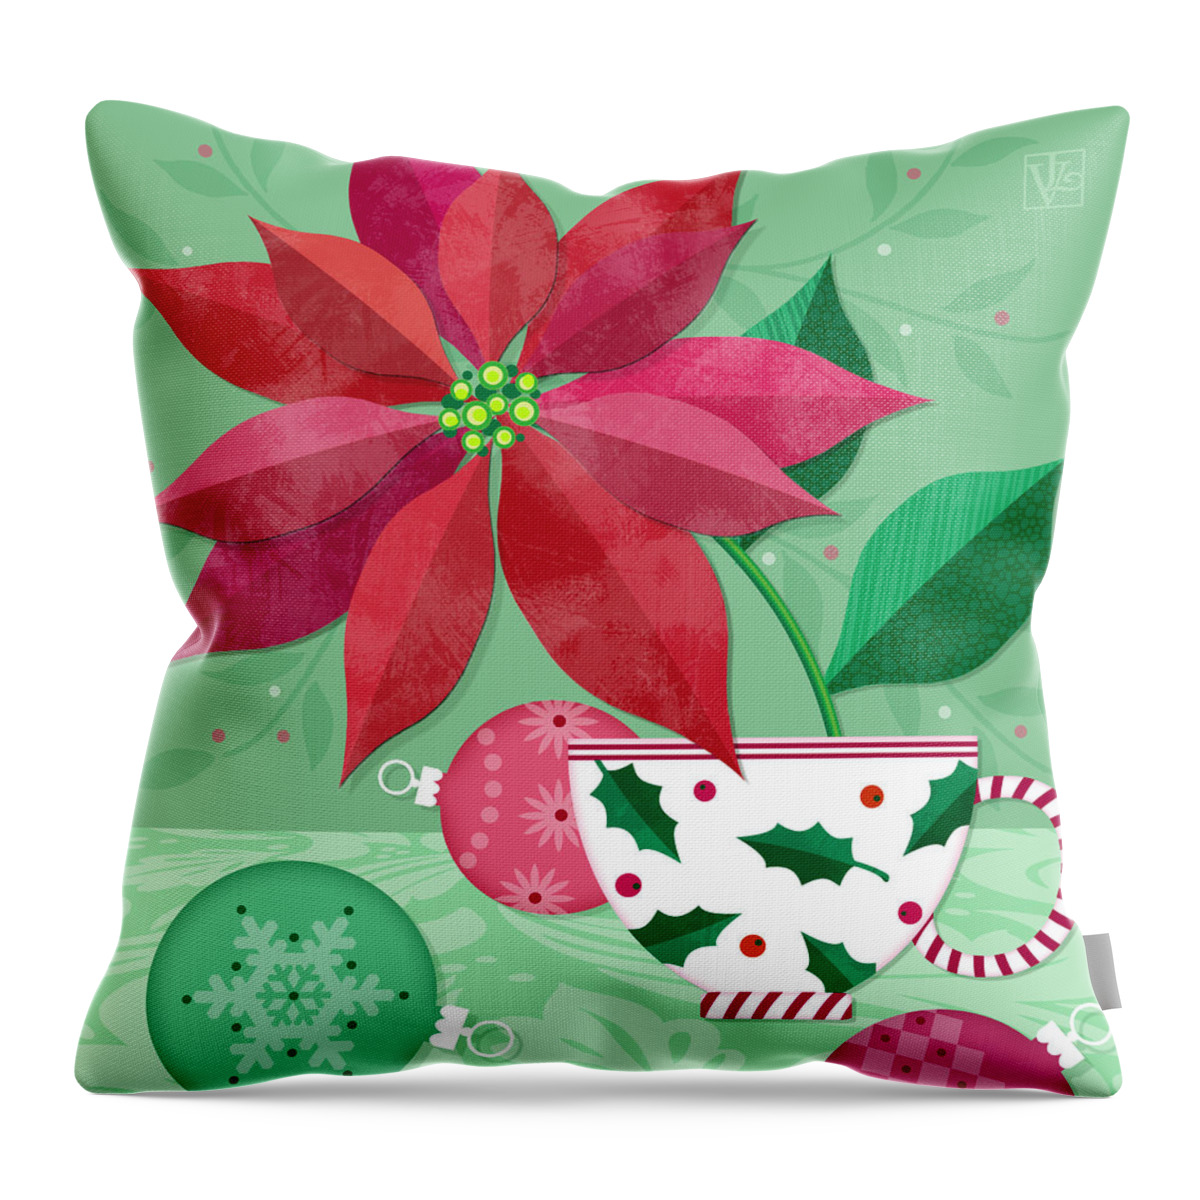 Christmas Throw Pillow featuring the digital art The Christmas Poinsettia by Valerie Drake Lesiak